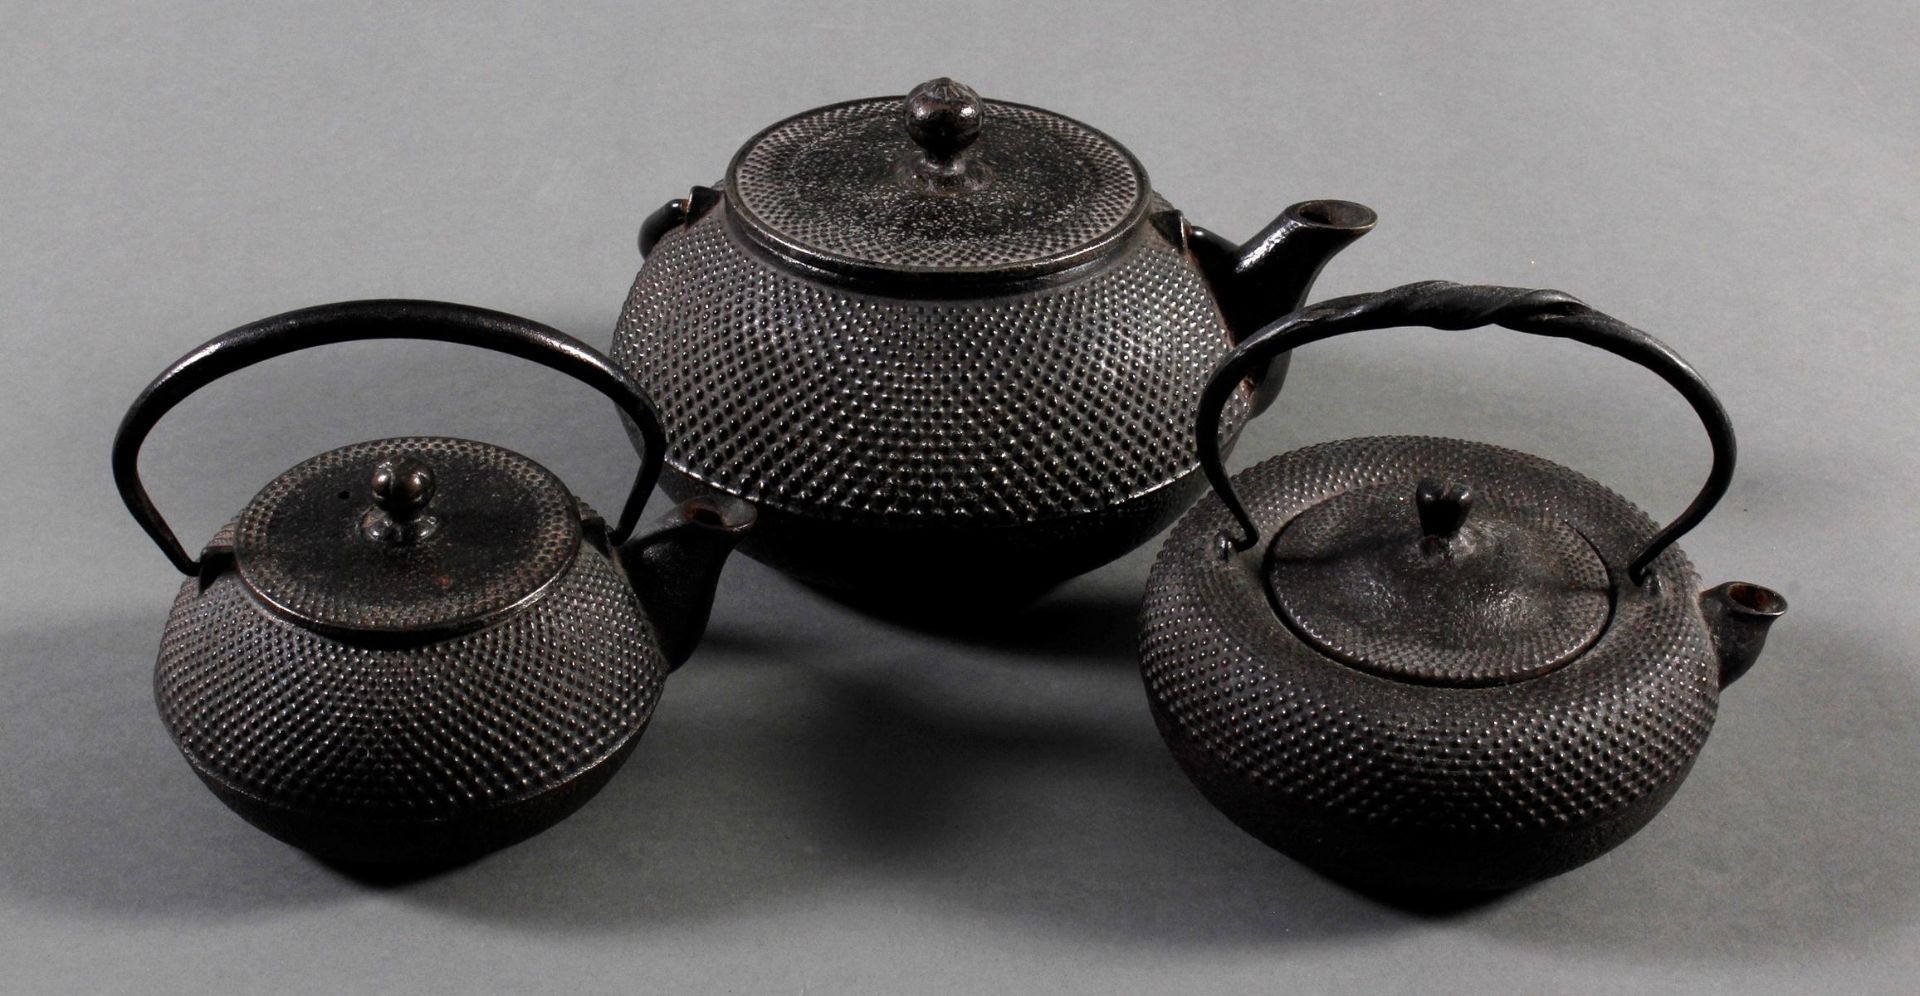 3 Teekannen (Tesubin) aus Eisen, Japan/China 19. Jh. - Image 2 of 3